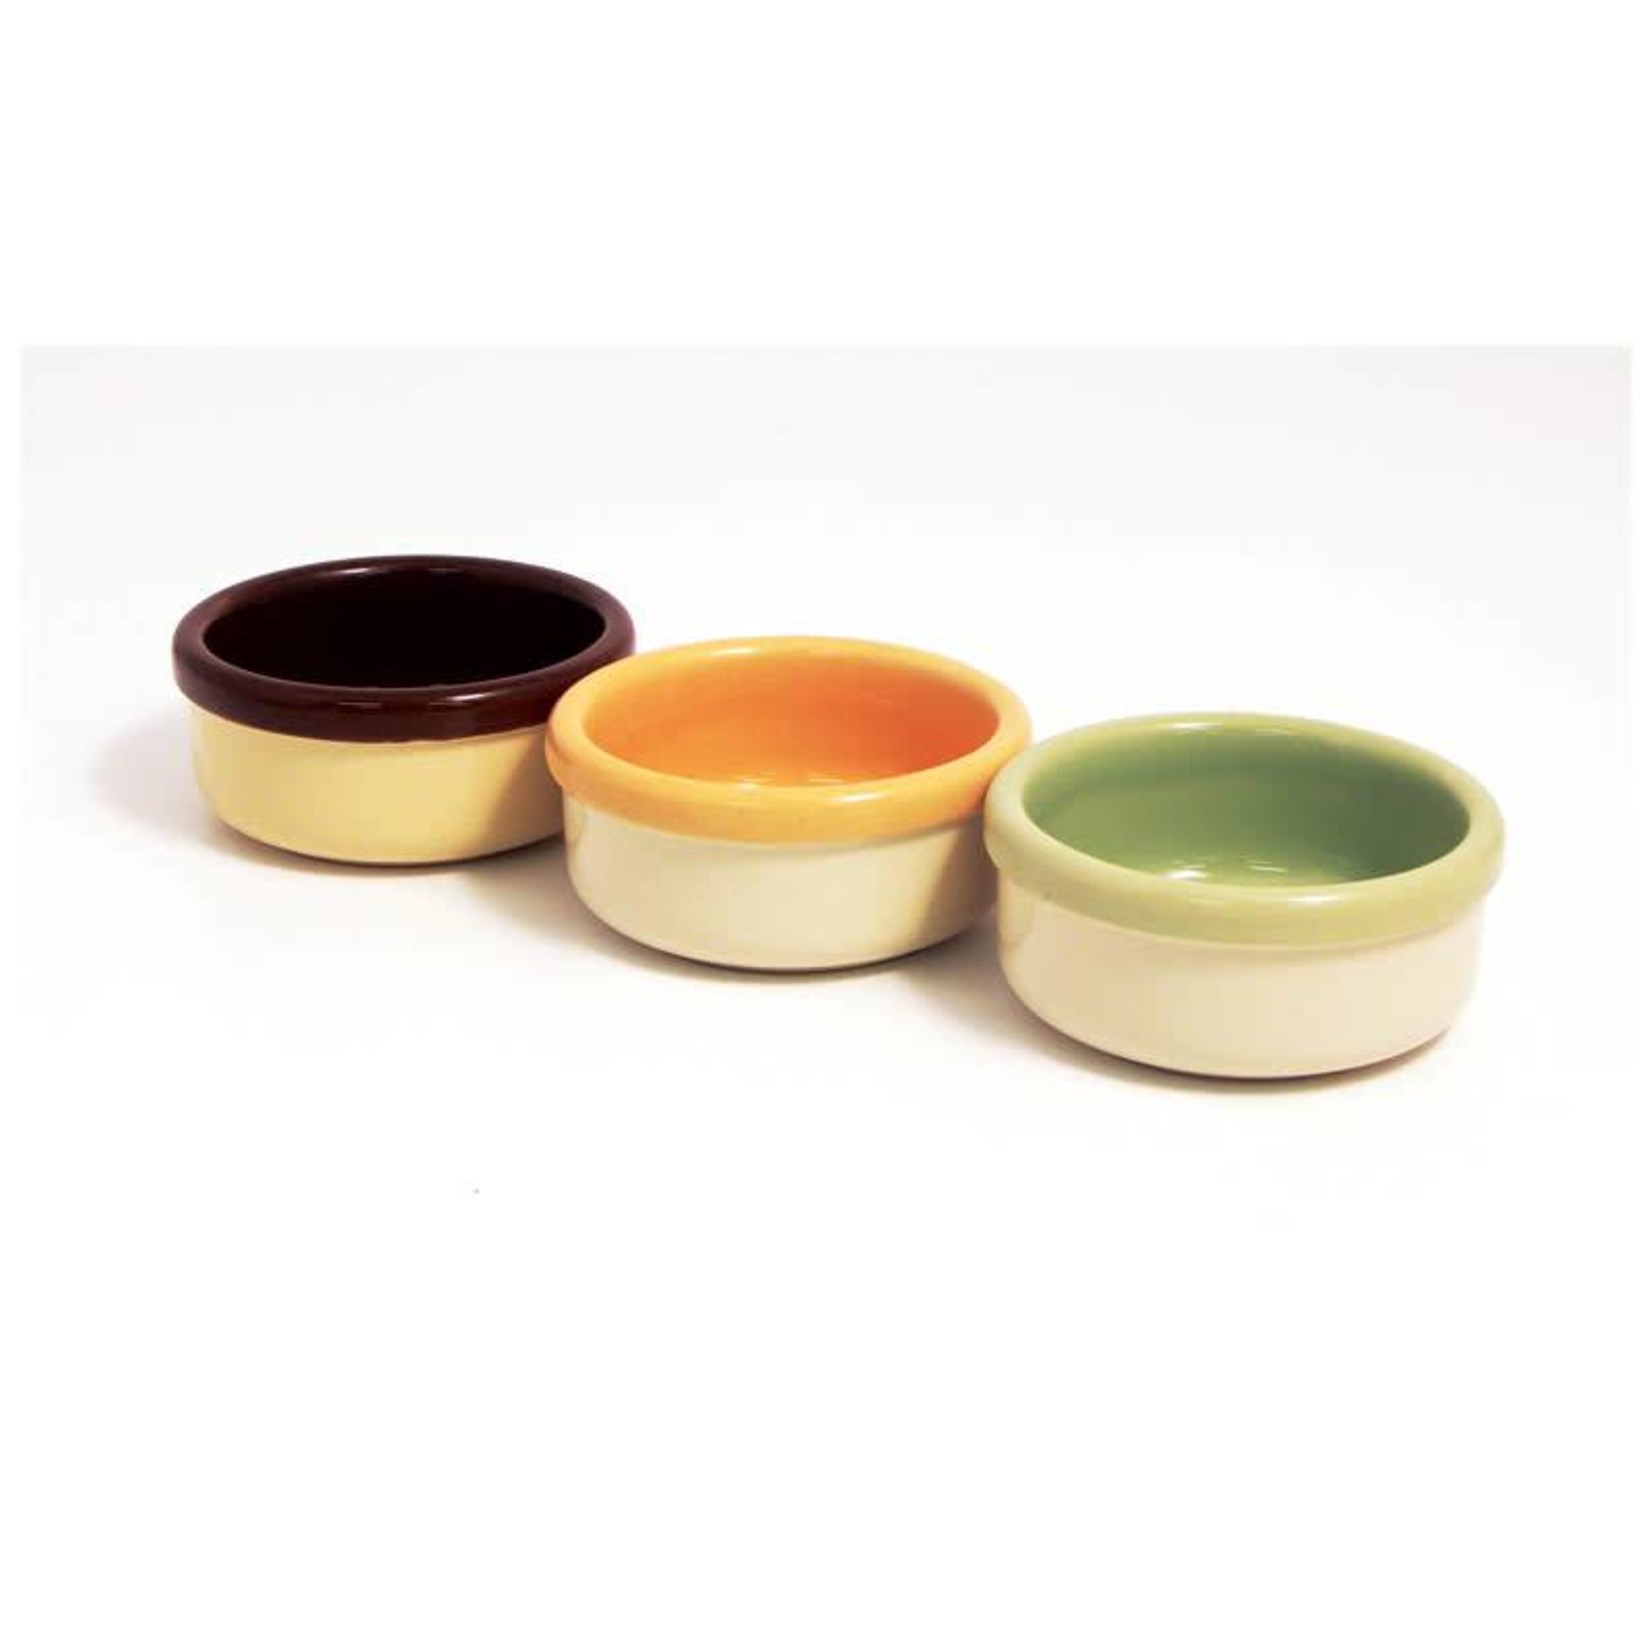 Rosewood Ceramic Two-Tone Design Small Animal Bowl, 9cm 3.5inch